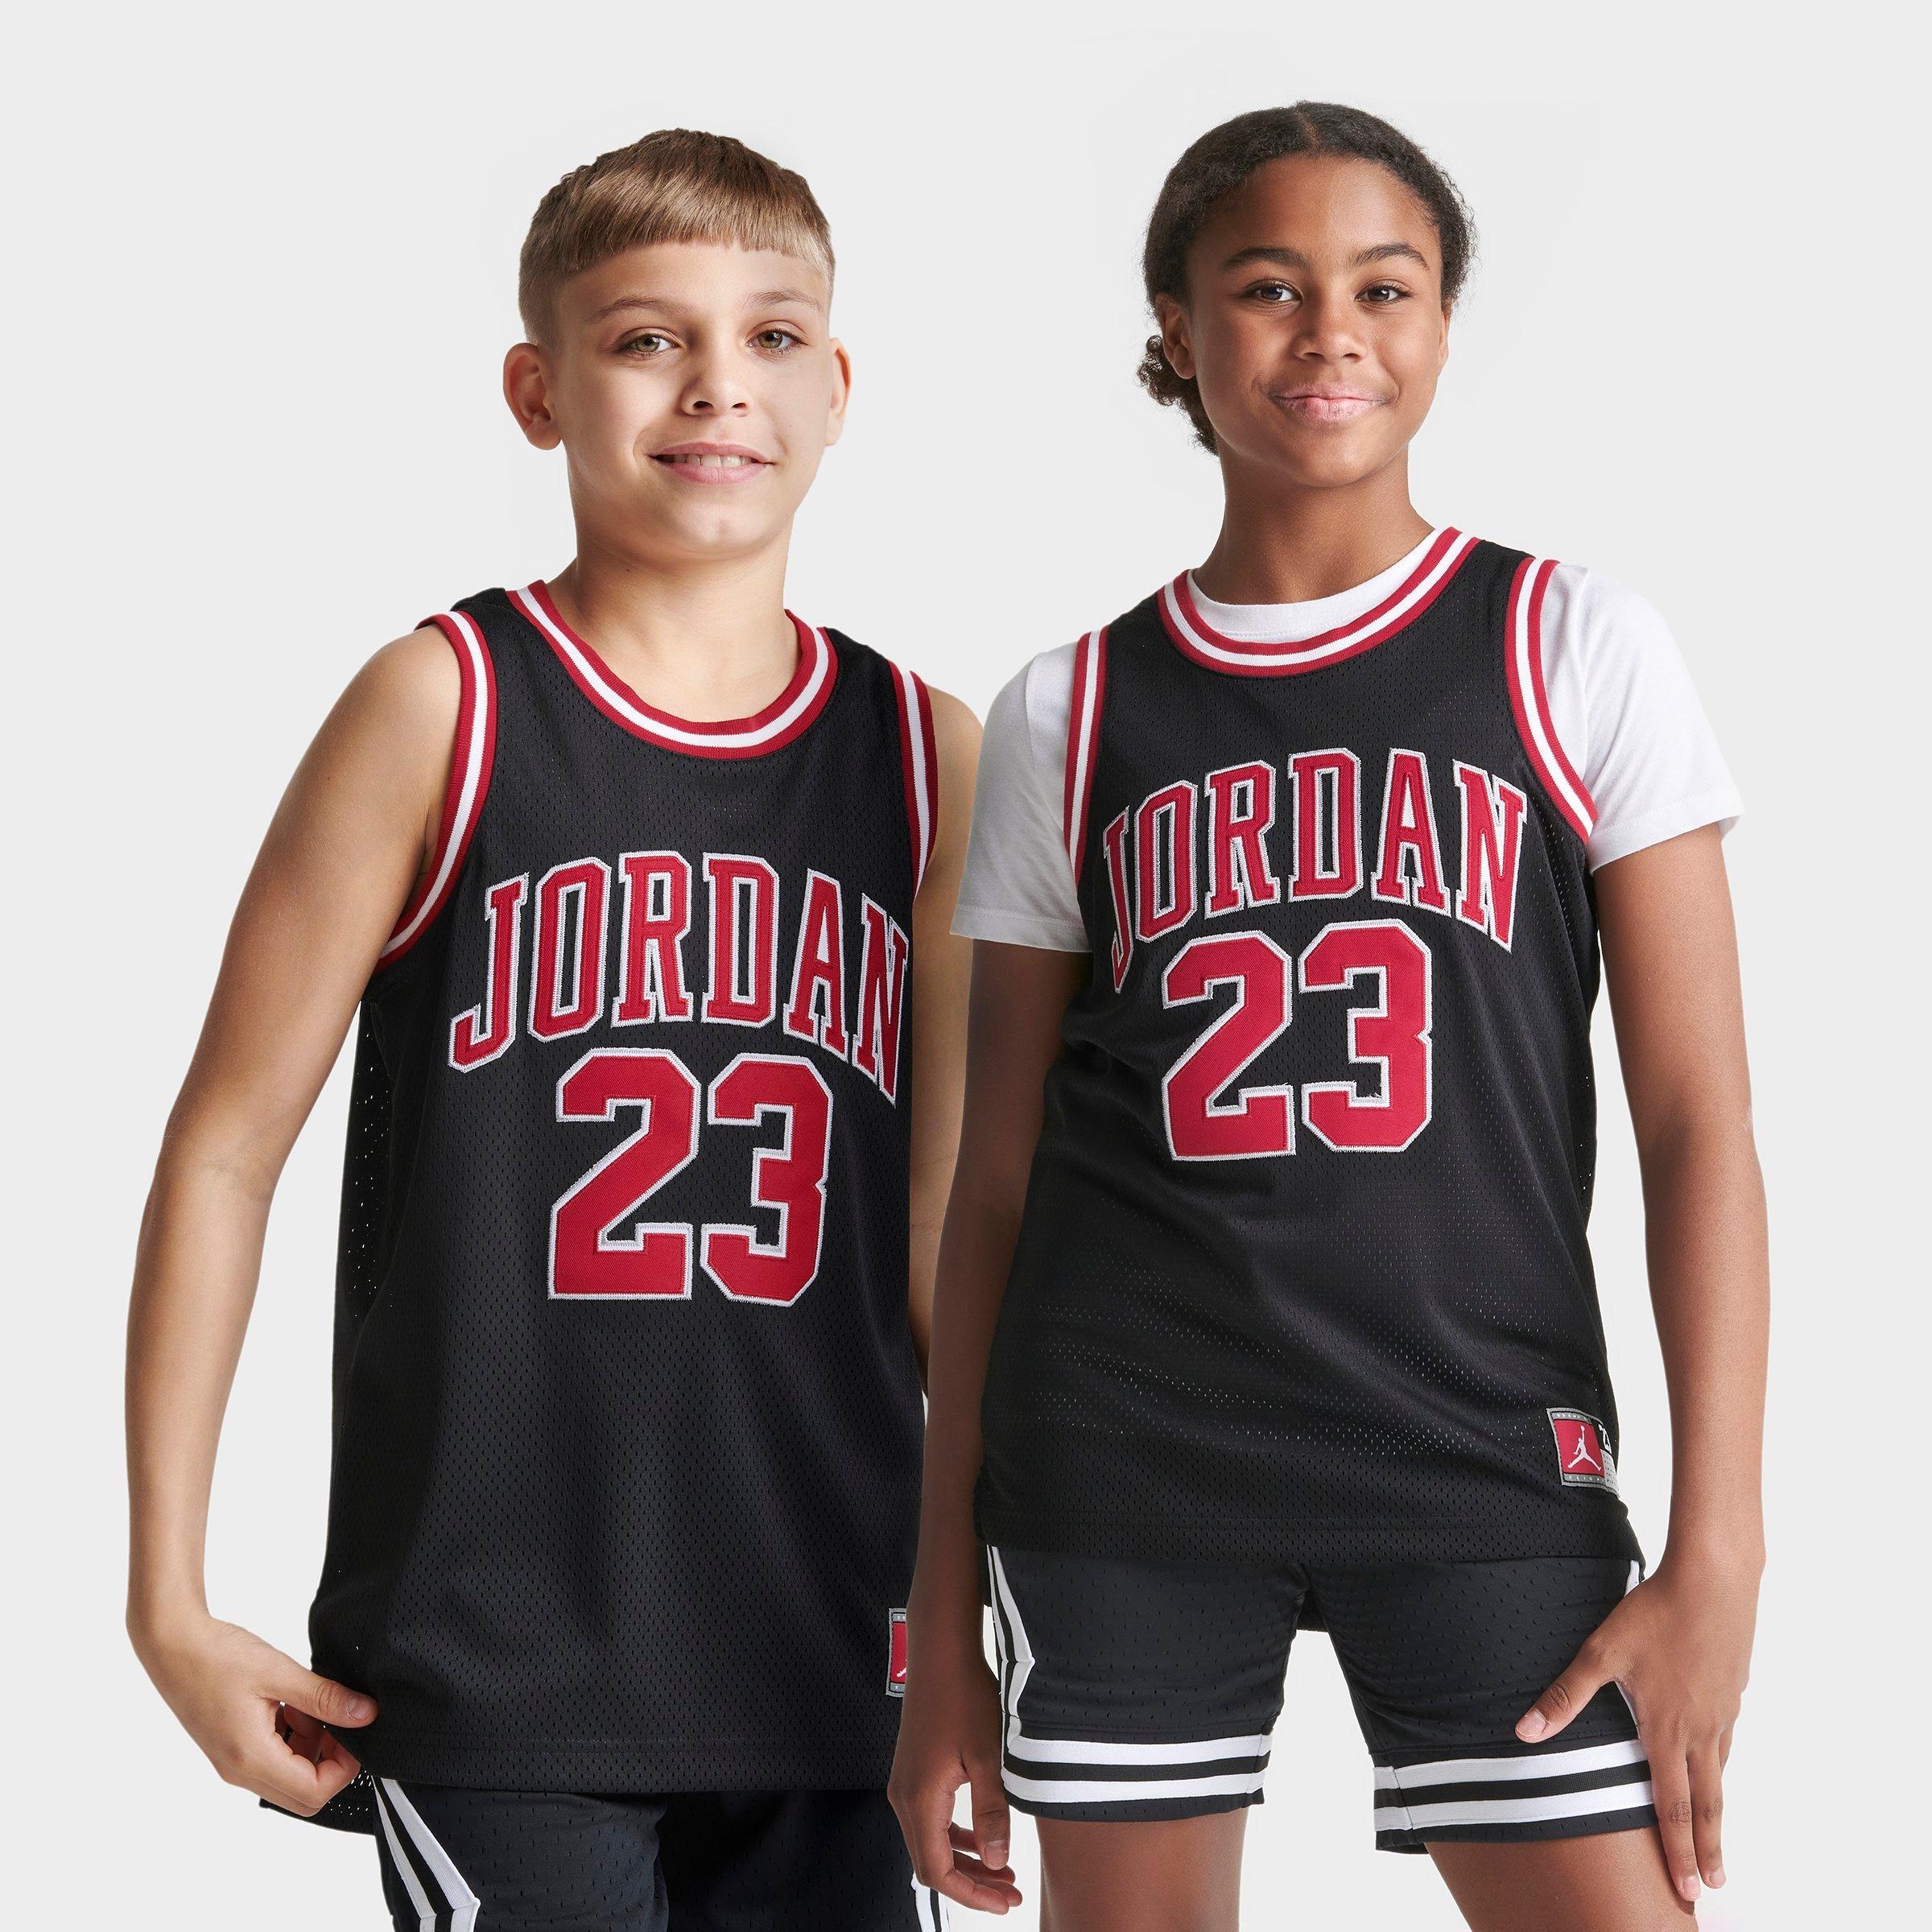 Nike Jordan Kids' Basketball Jersey In Black